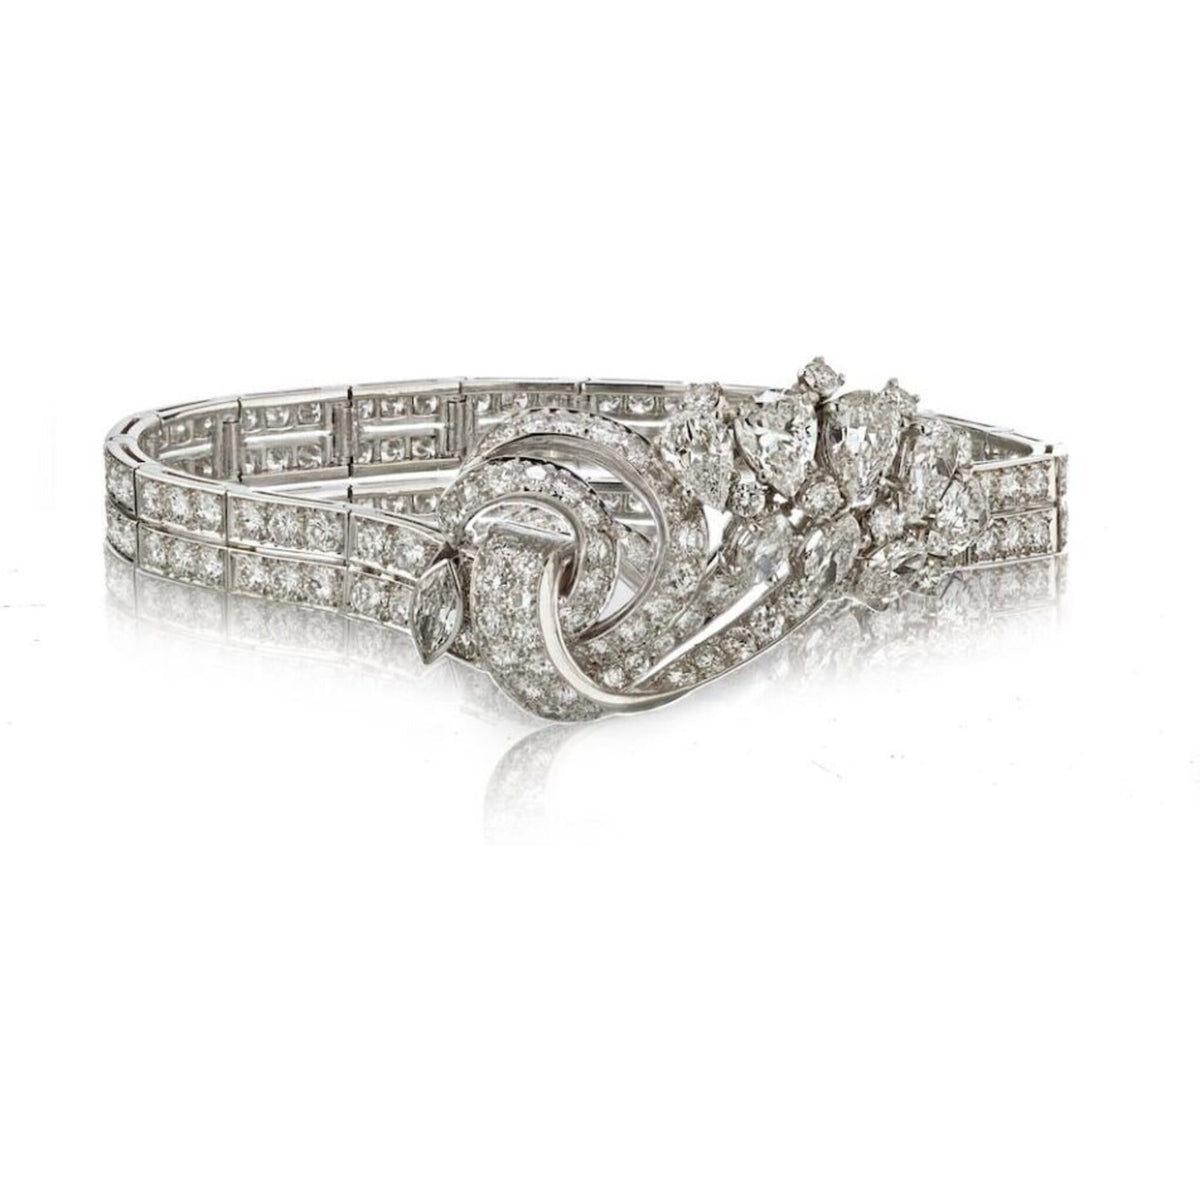 Mellerio - French Platinum Diamond Bracelet